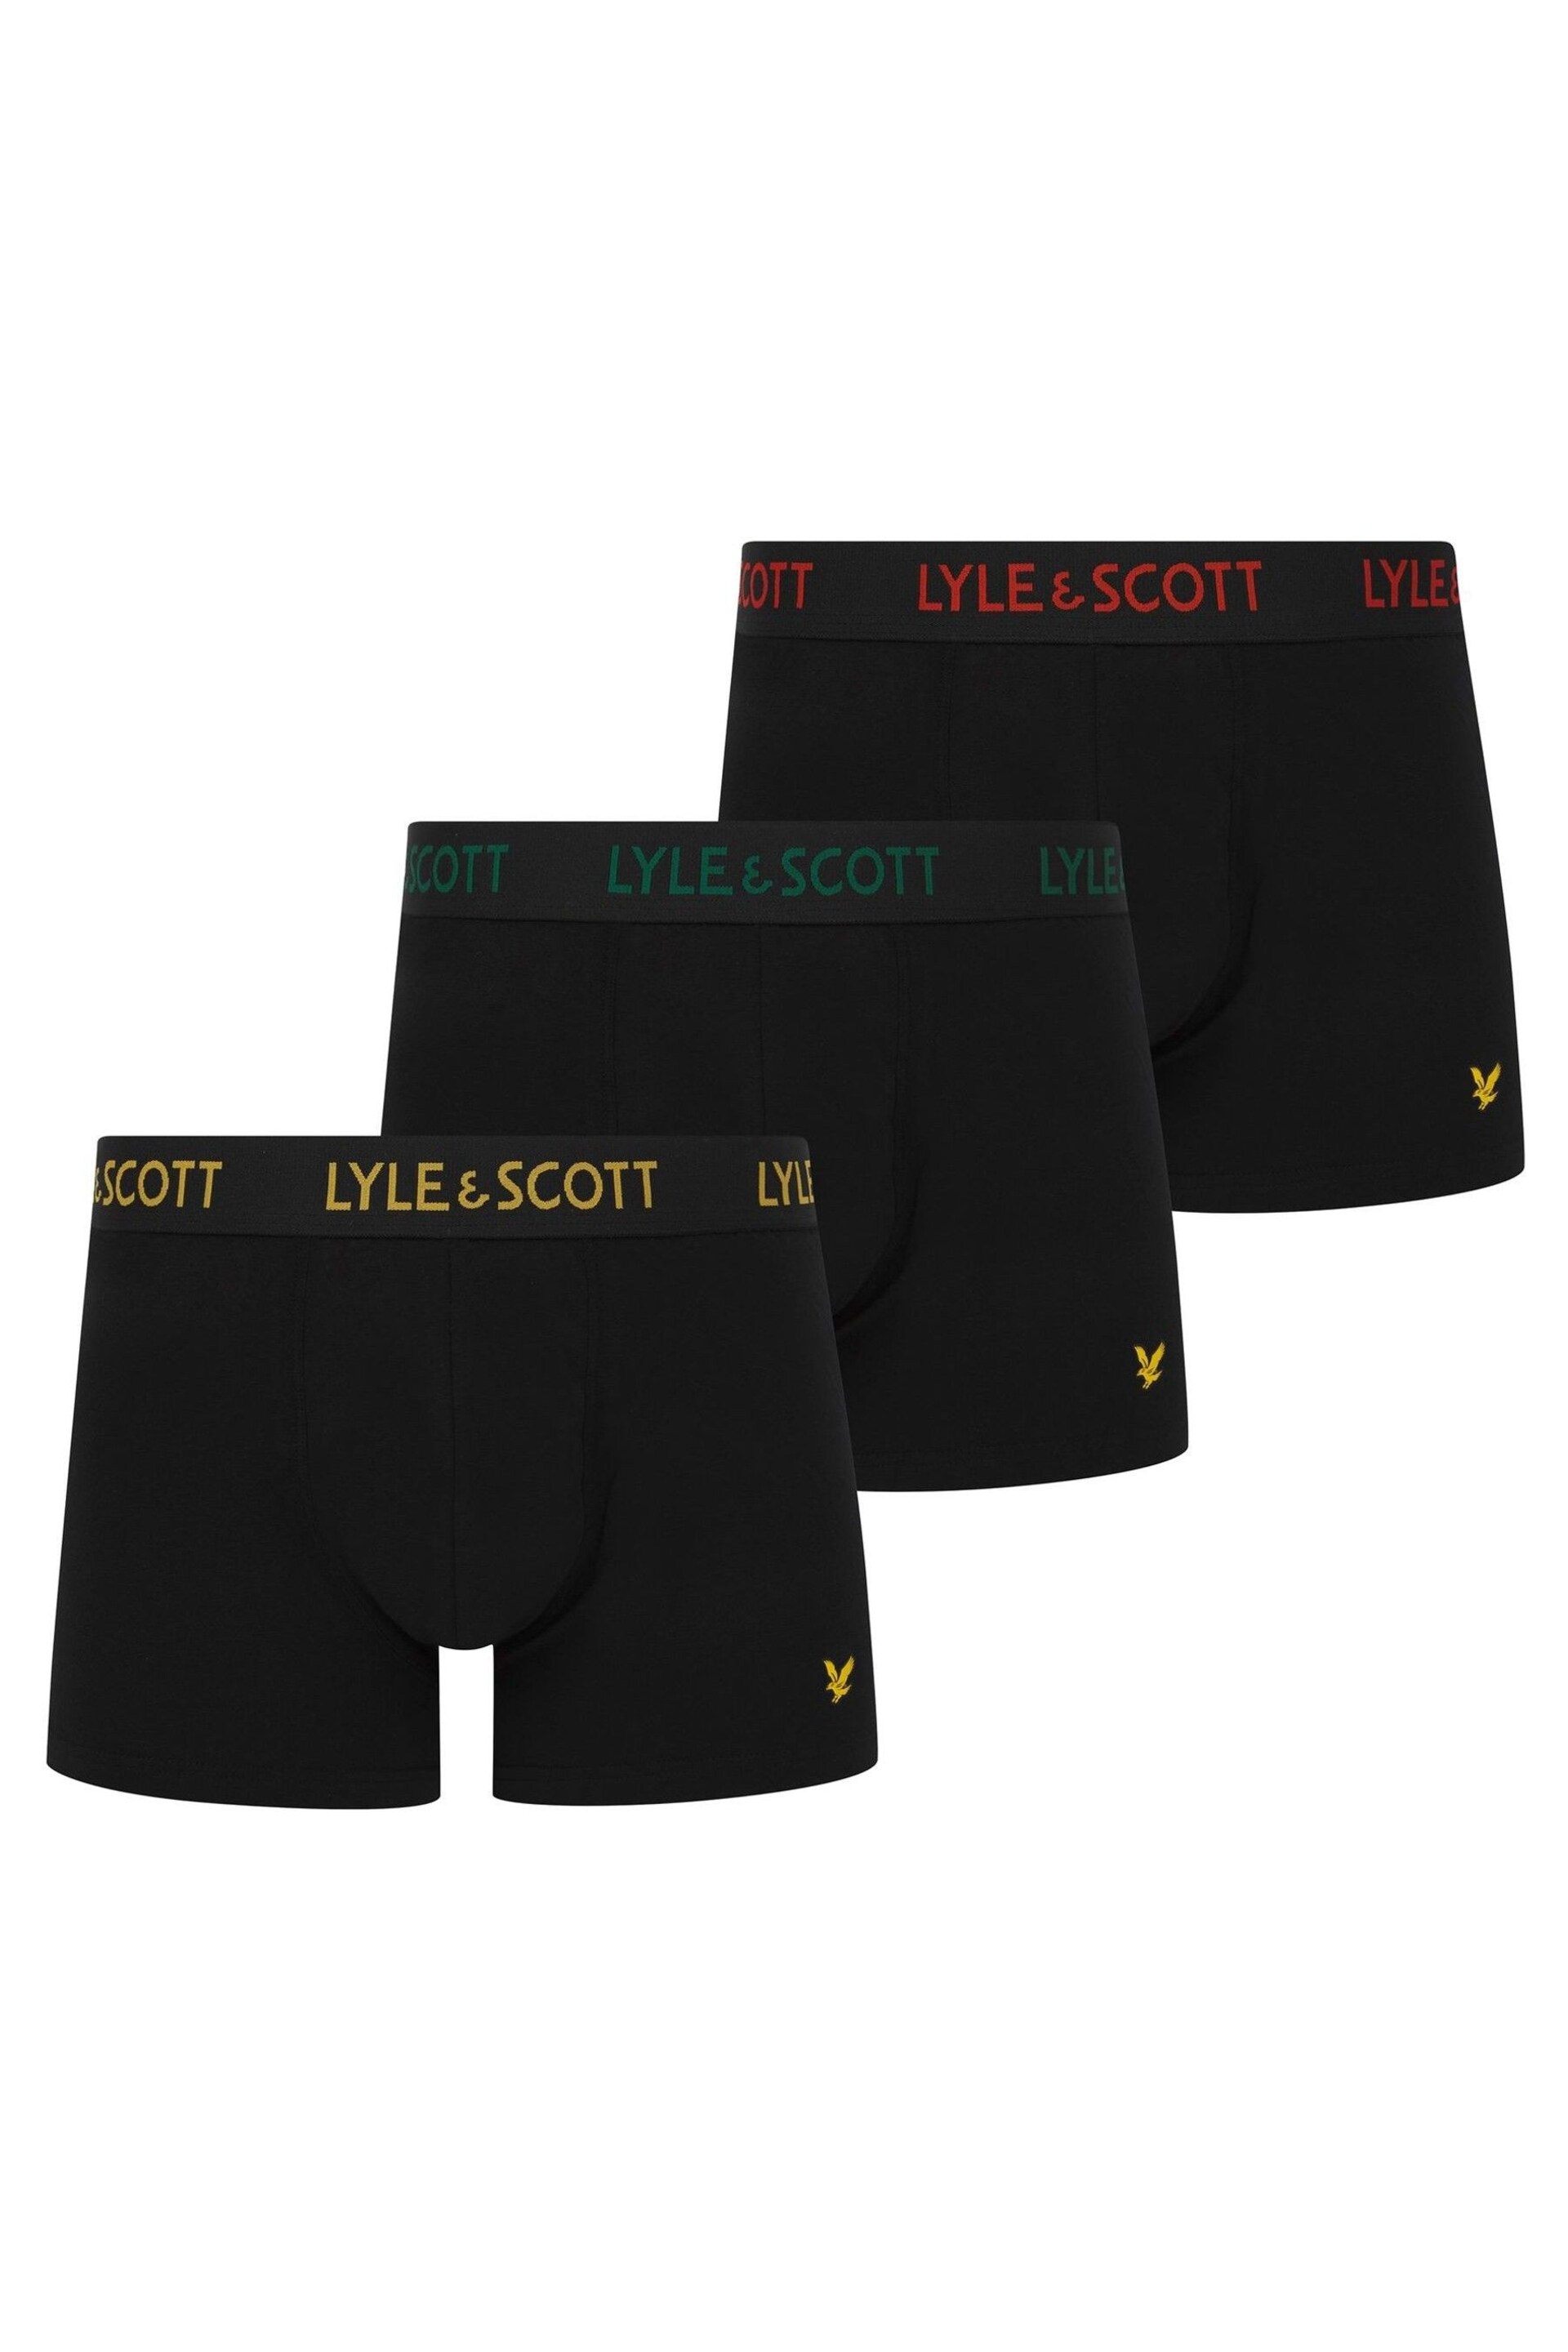 Lyle & Scott Barclay Underwear Black Trunks 3 Pack - Image 1 of 4